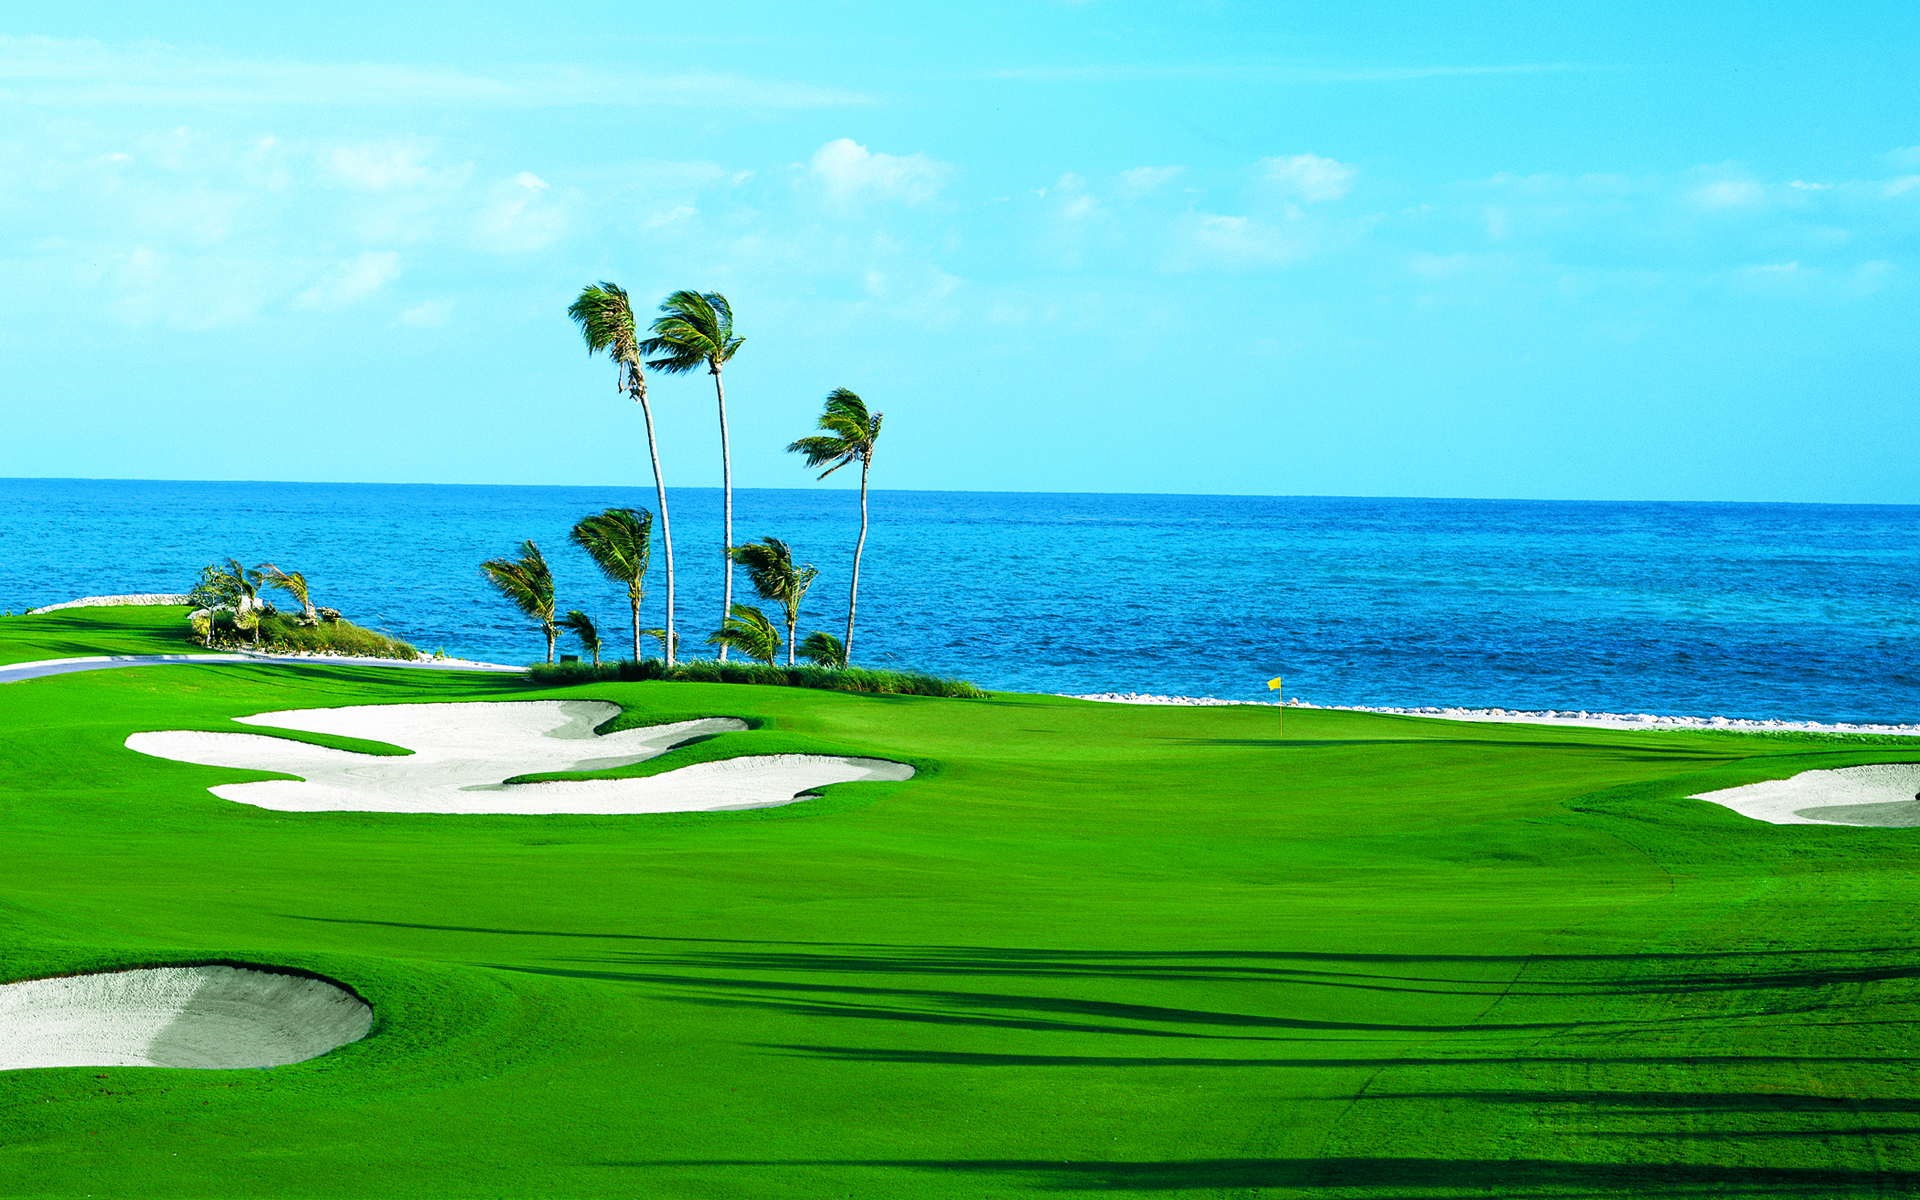 Desktop Backgrounds Golf Courses wallpapers HD free   386688